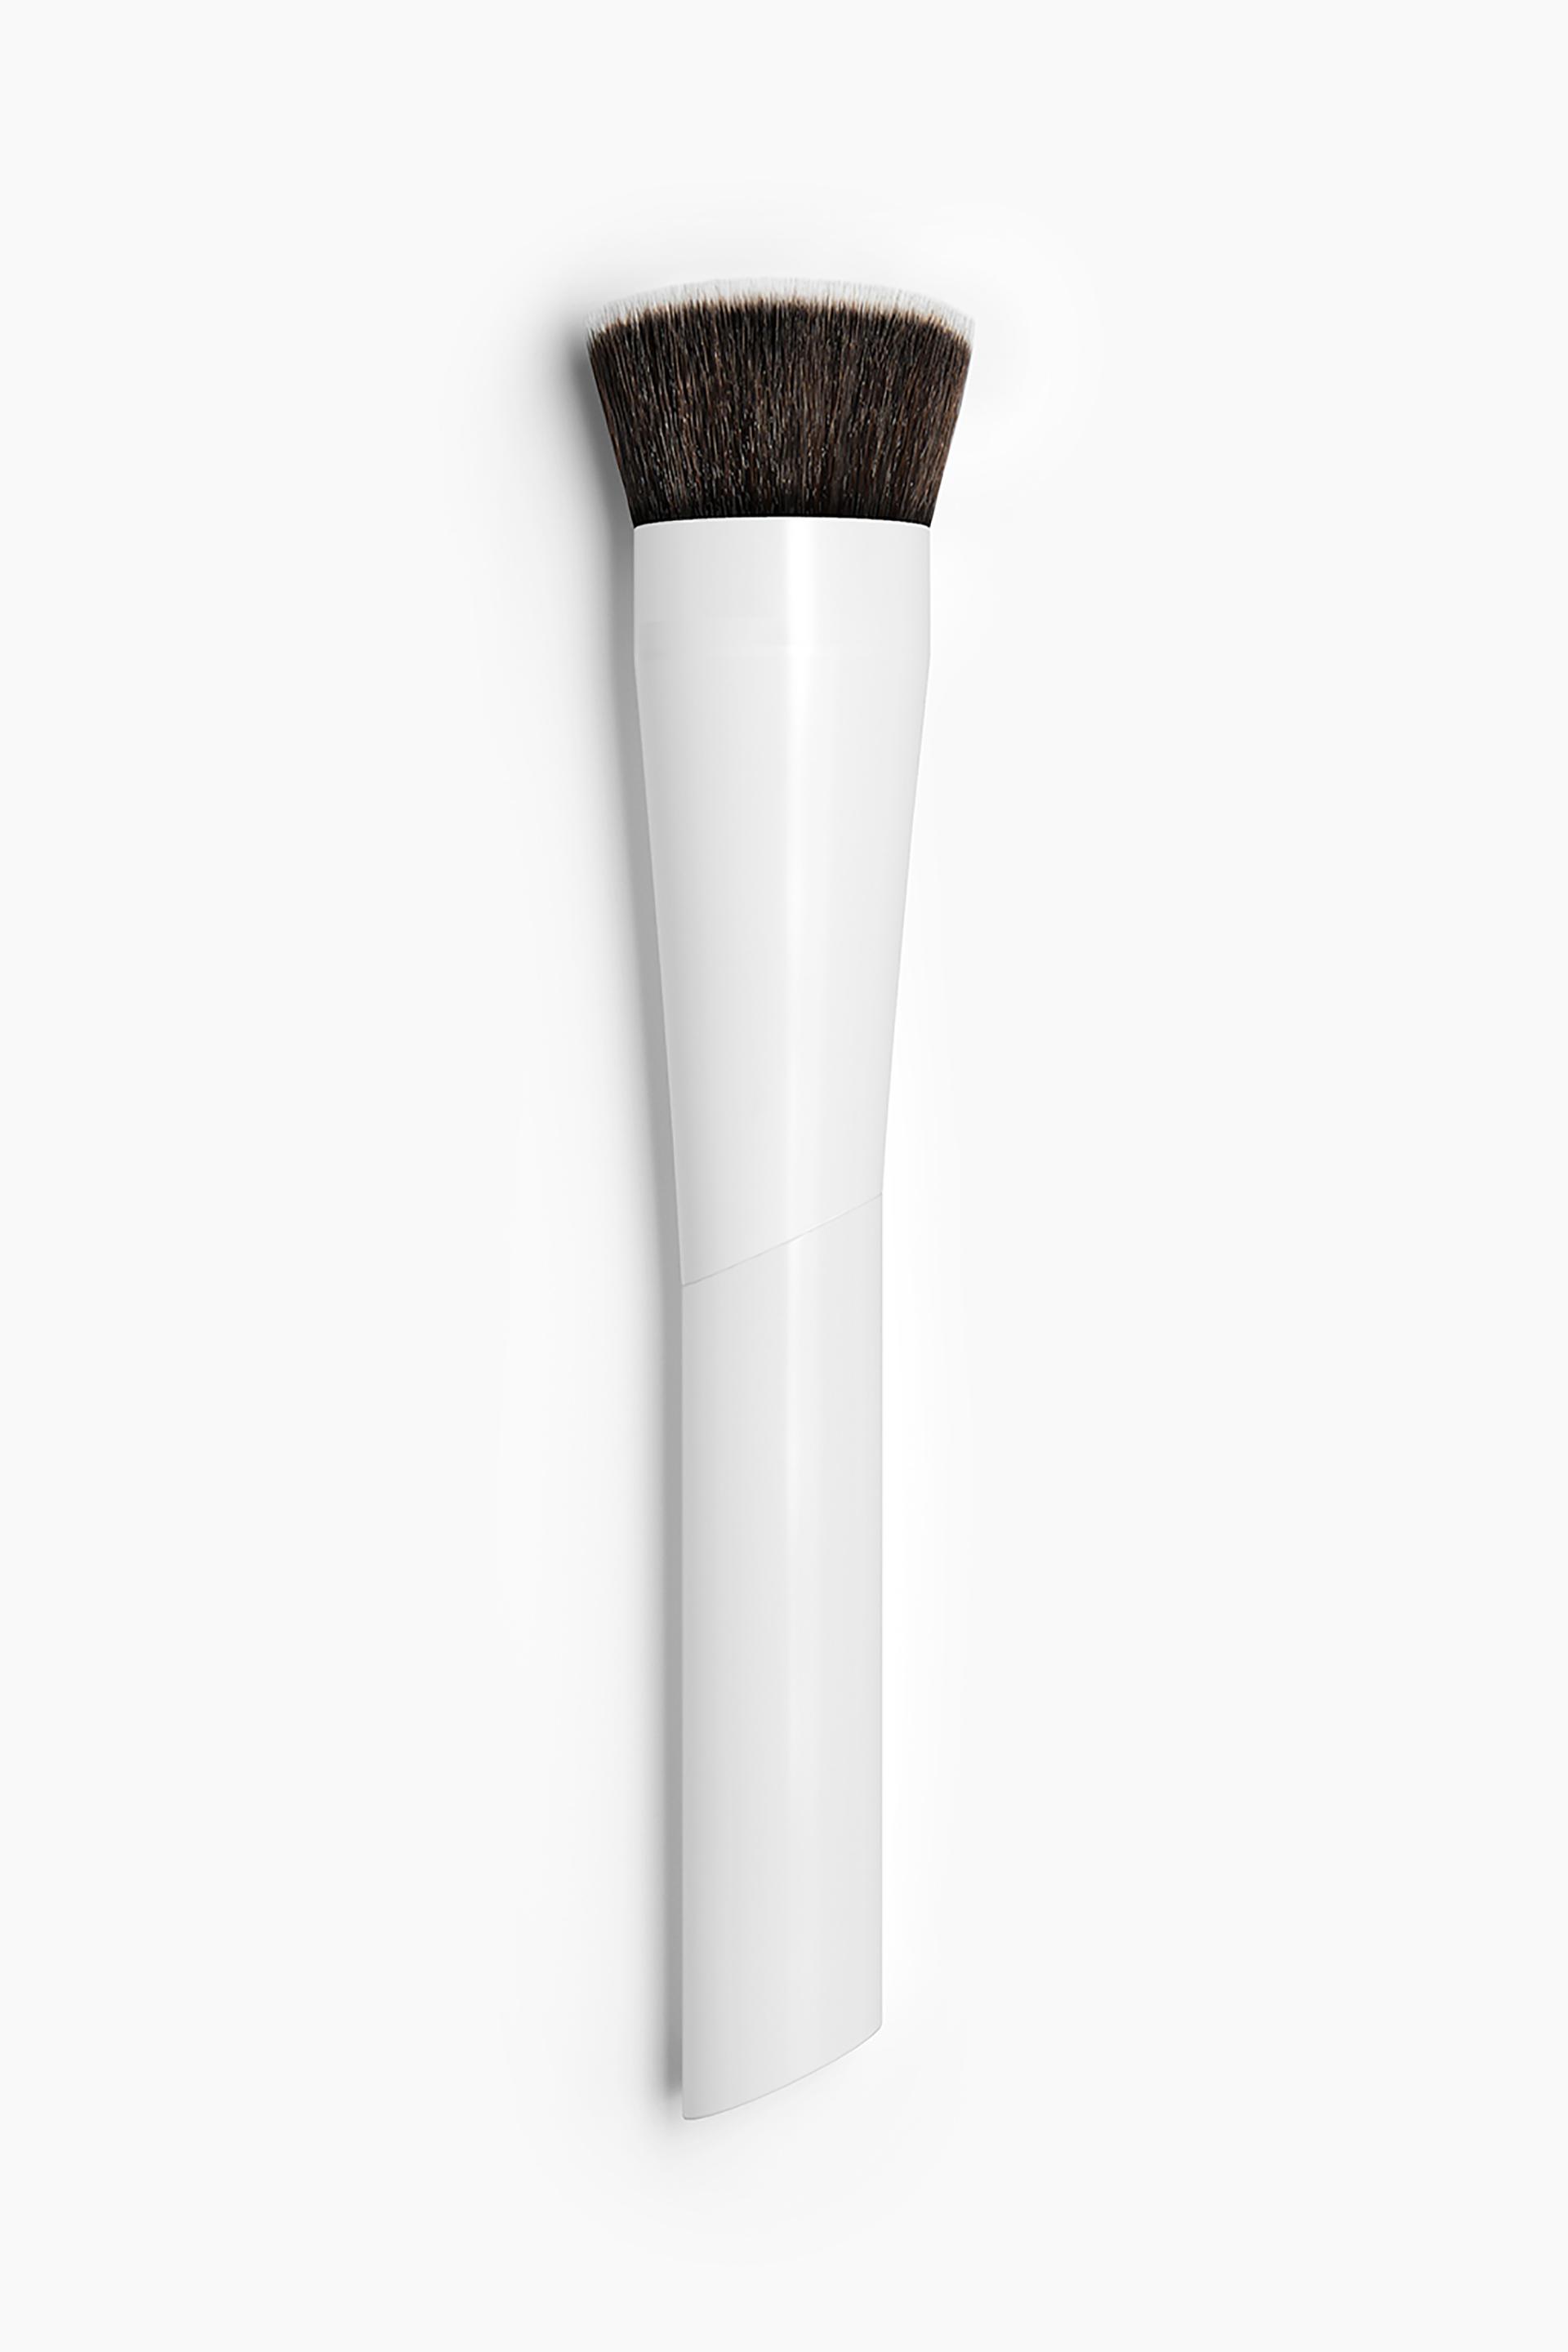  Retractable Kabuki Brush Travel Makeup Brush, Blush Brush,  Foundation Brush, Suitable for Liquid Foundation, Pressed Powder, Contour  Cream, Capsule-shape Super cute and multi-color available, White : Beauty &  Personal Care